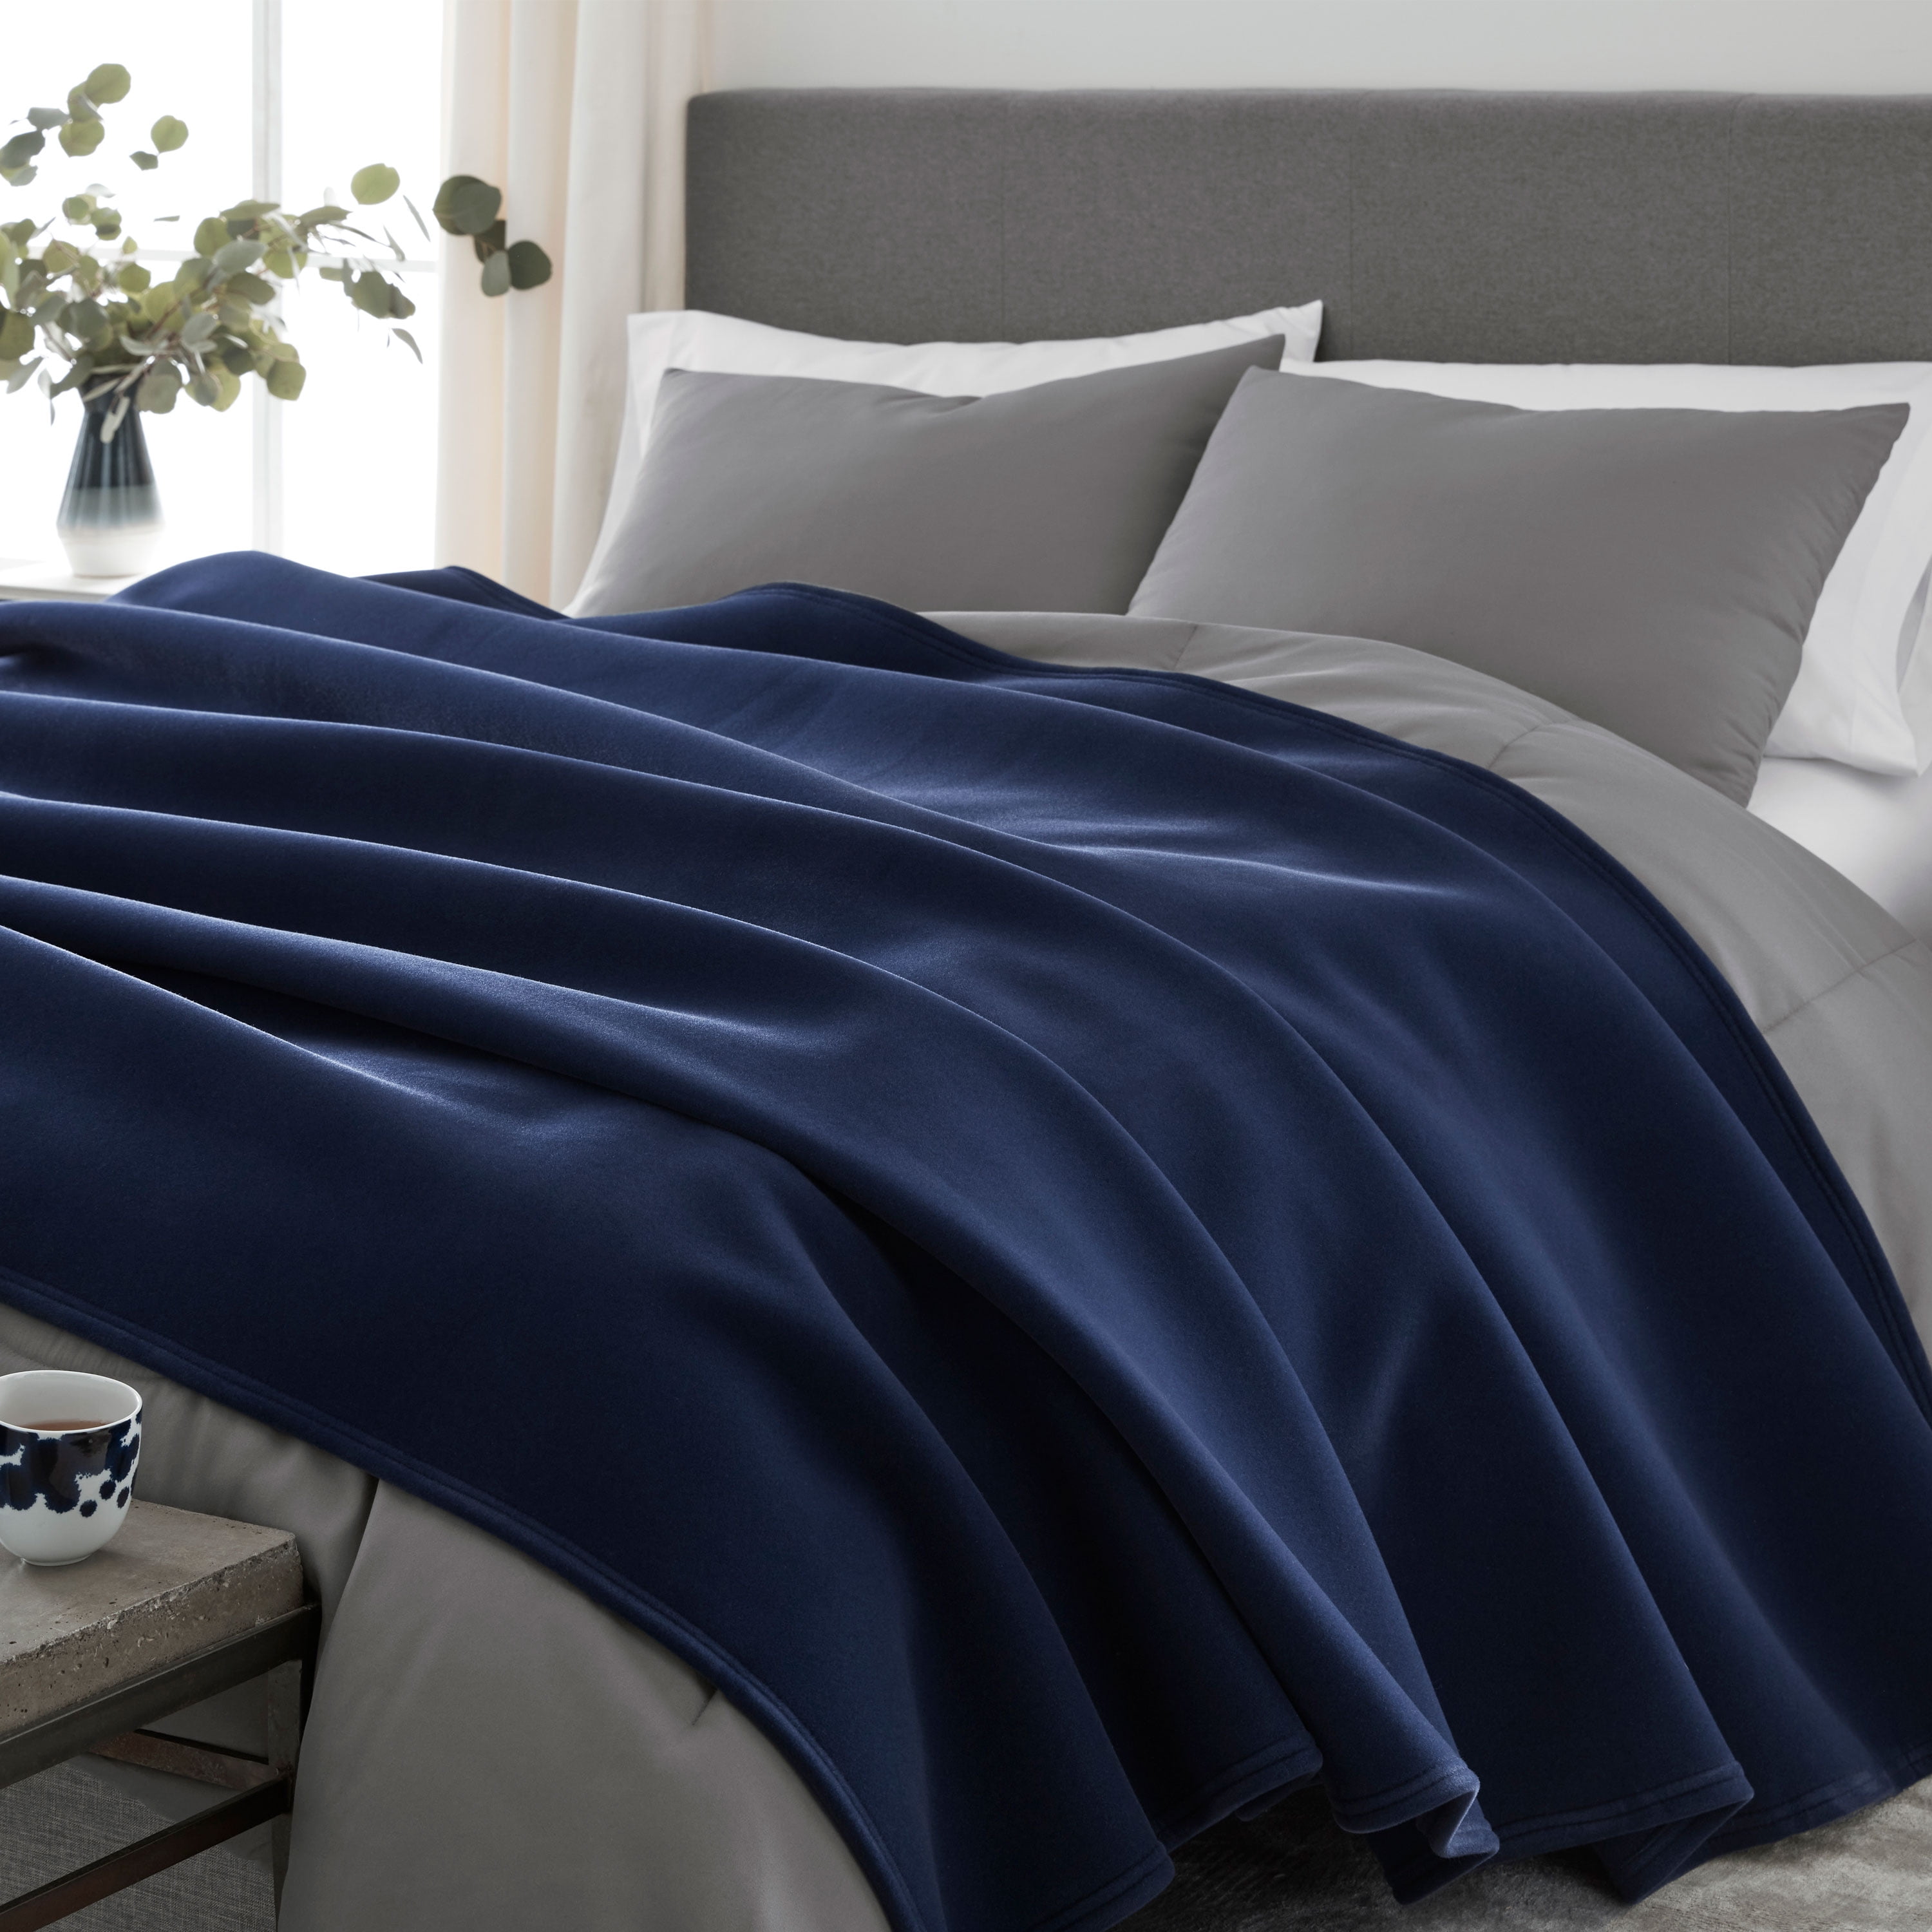 Solid Navy Blue Blanket Bedding Throw Flannel King Super Soft Warm Best Value 